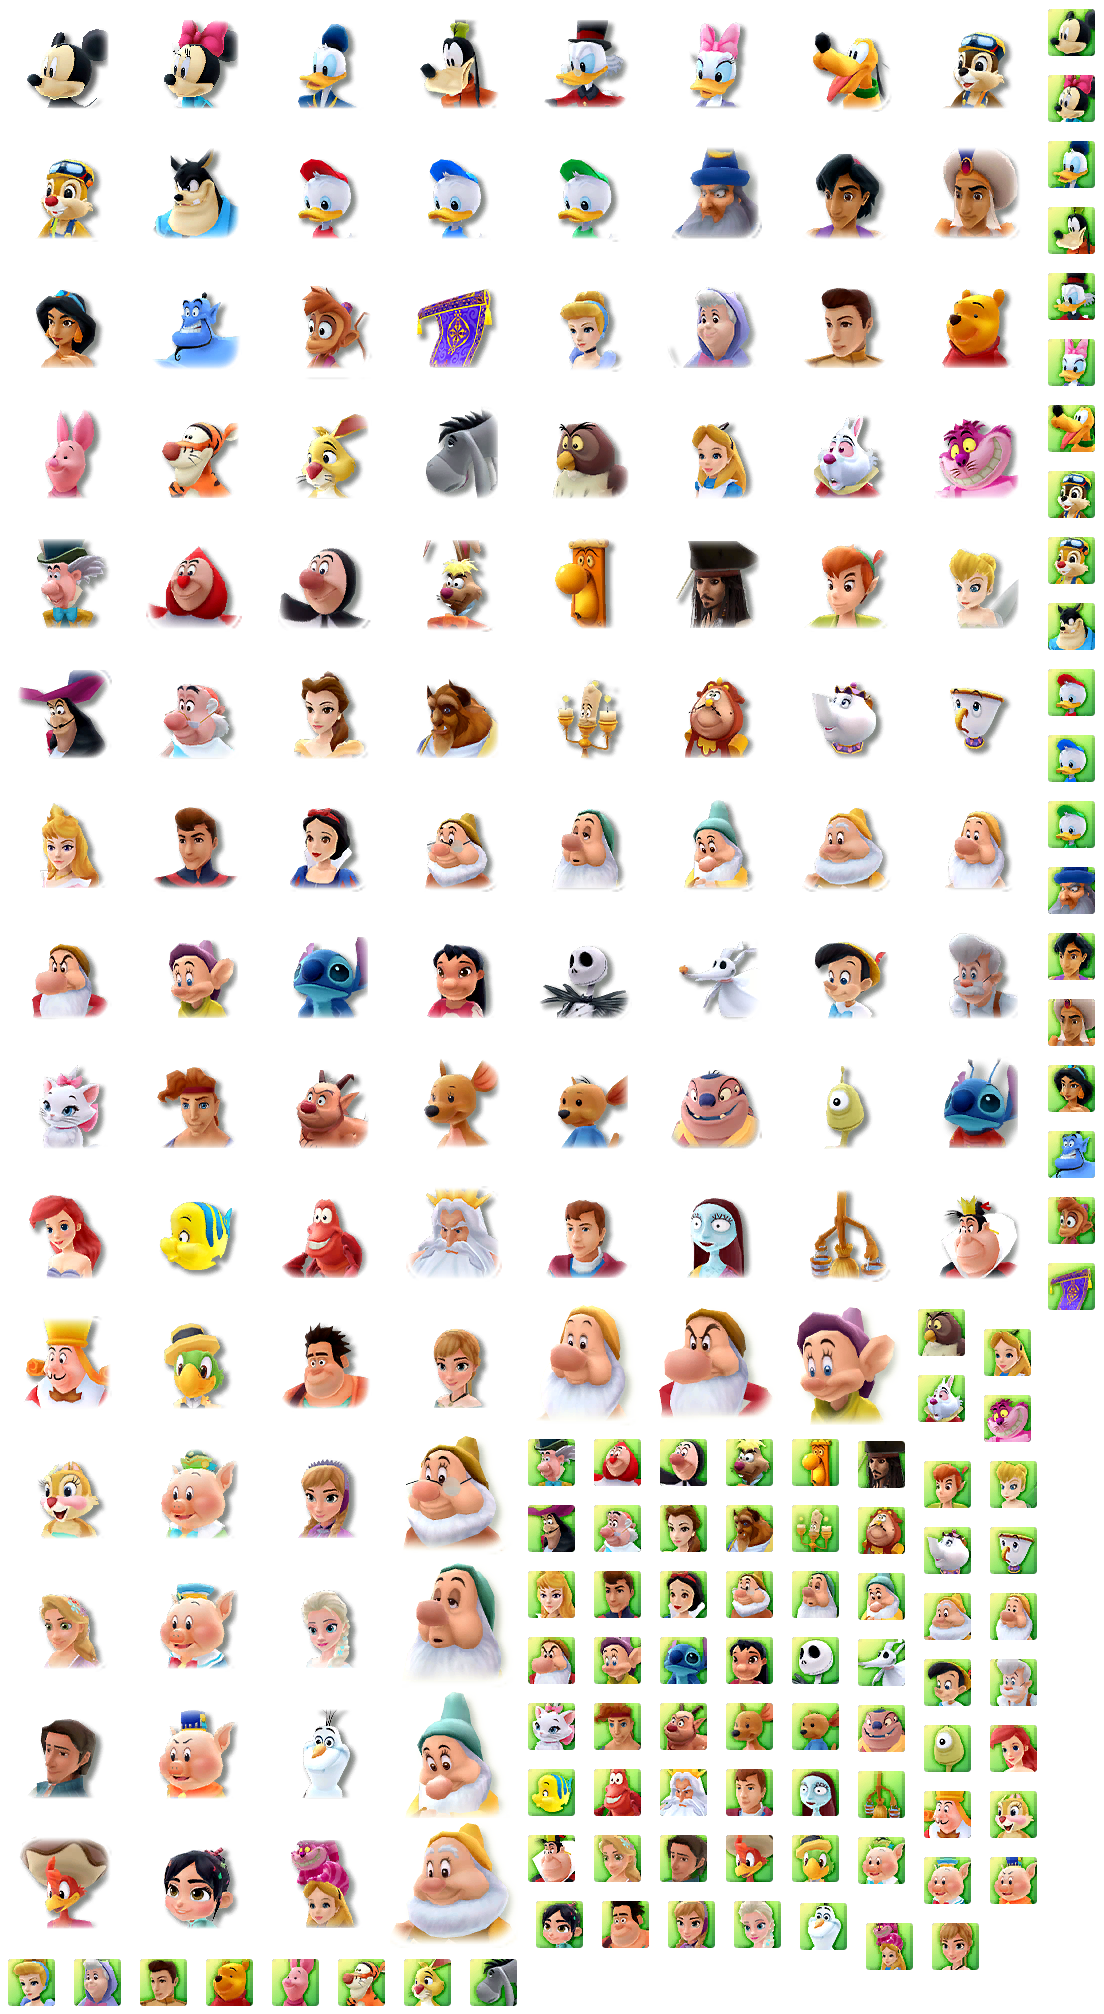 Disney Magical World 2: Enchanted Edition - Disney Character Icons